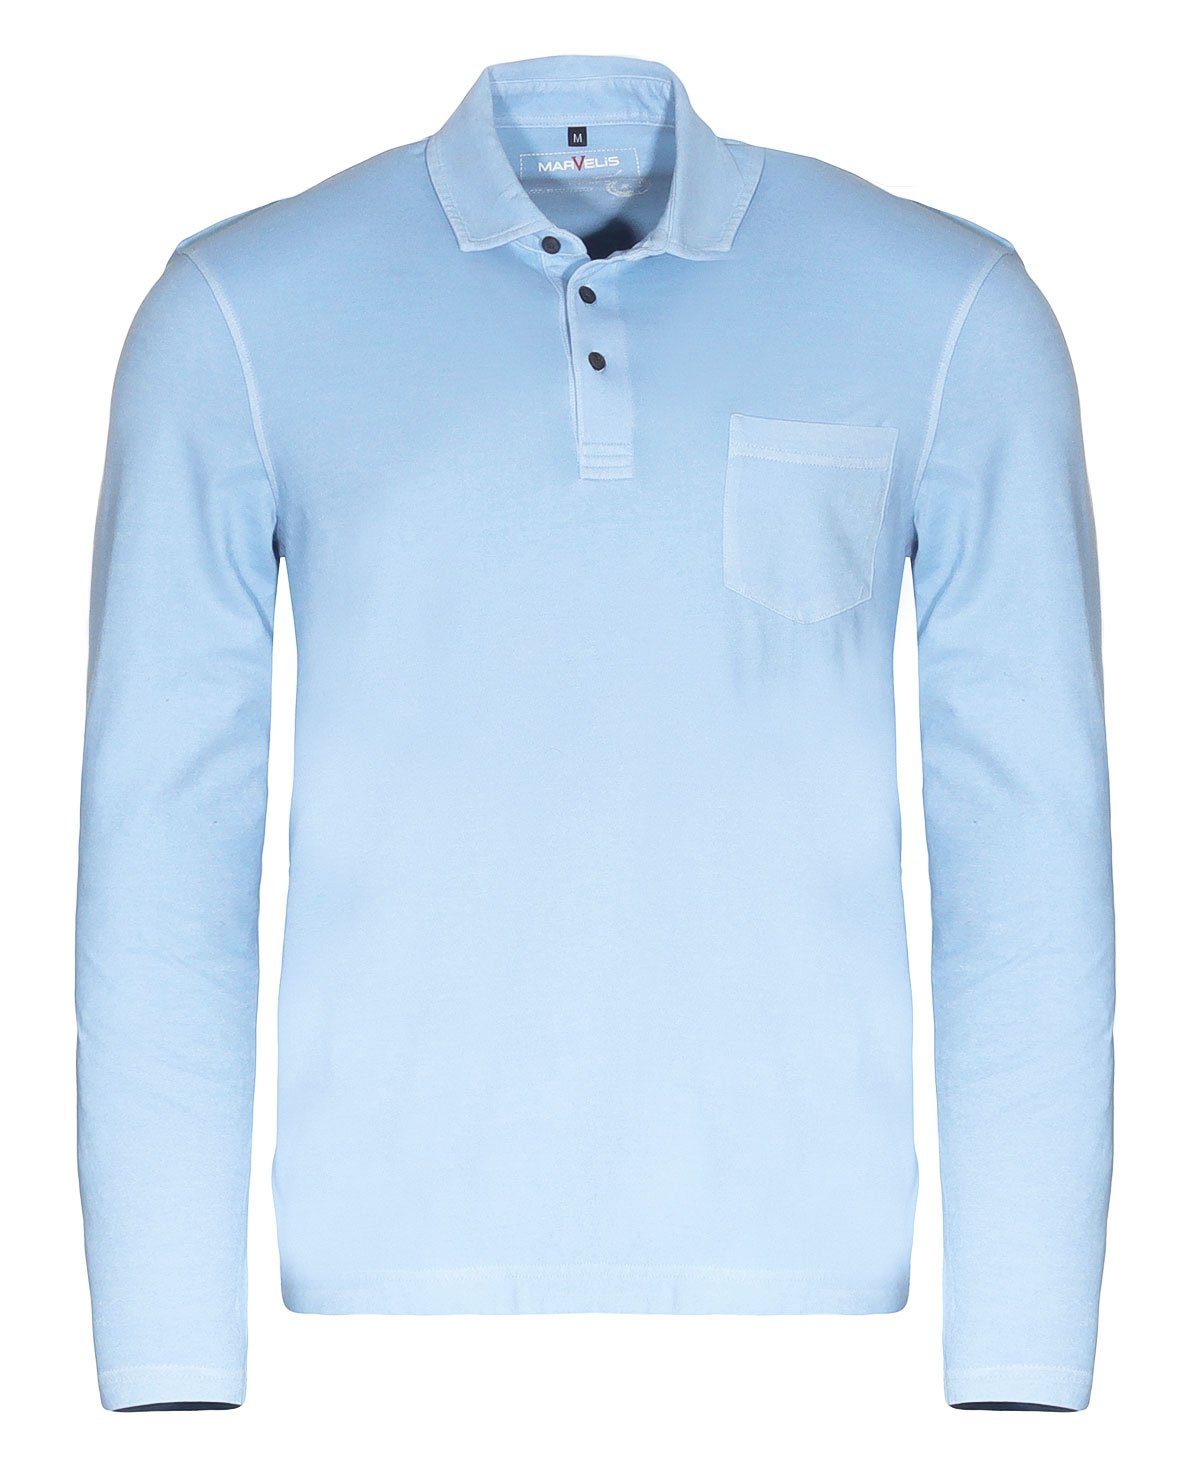 Poloshirt Einfarbig Hellblau - MARVELIS Fit Poloshirt - Polokragen - - Casual